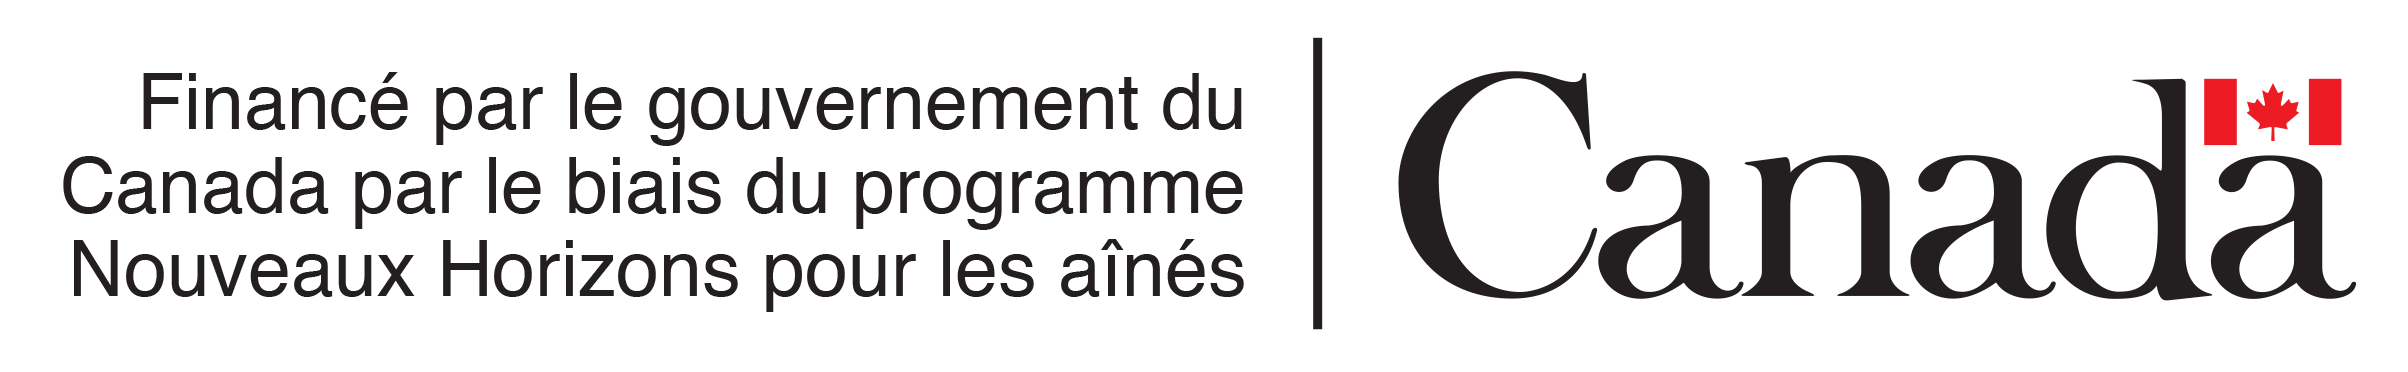 logo finance par